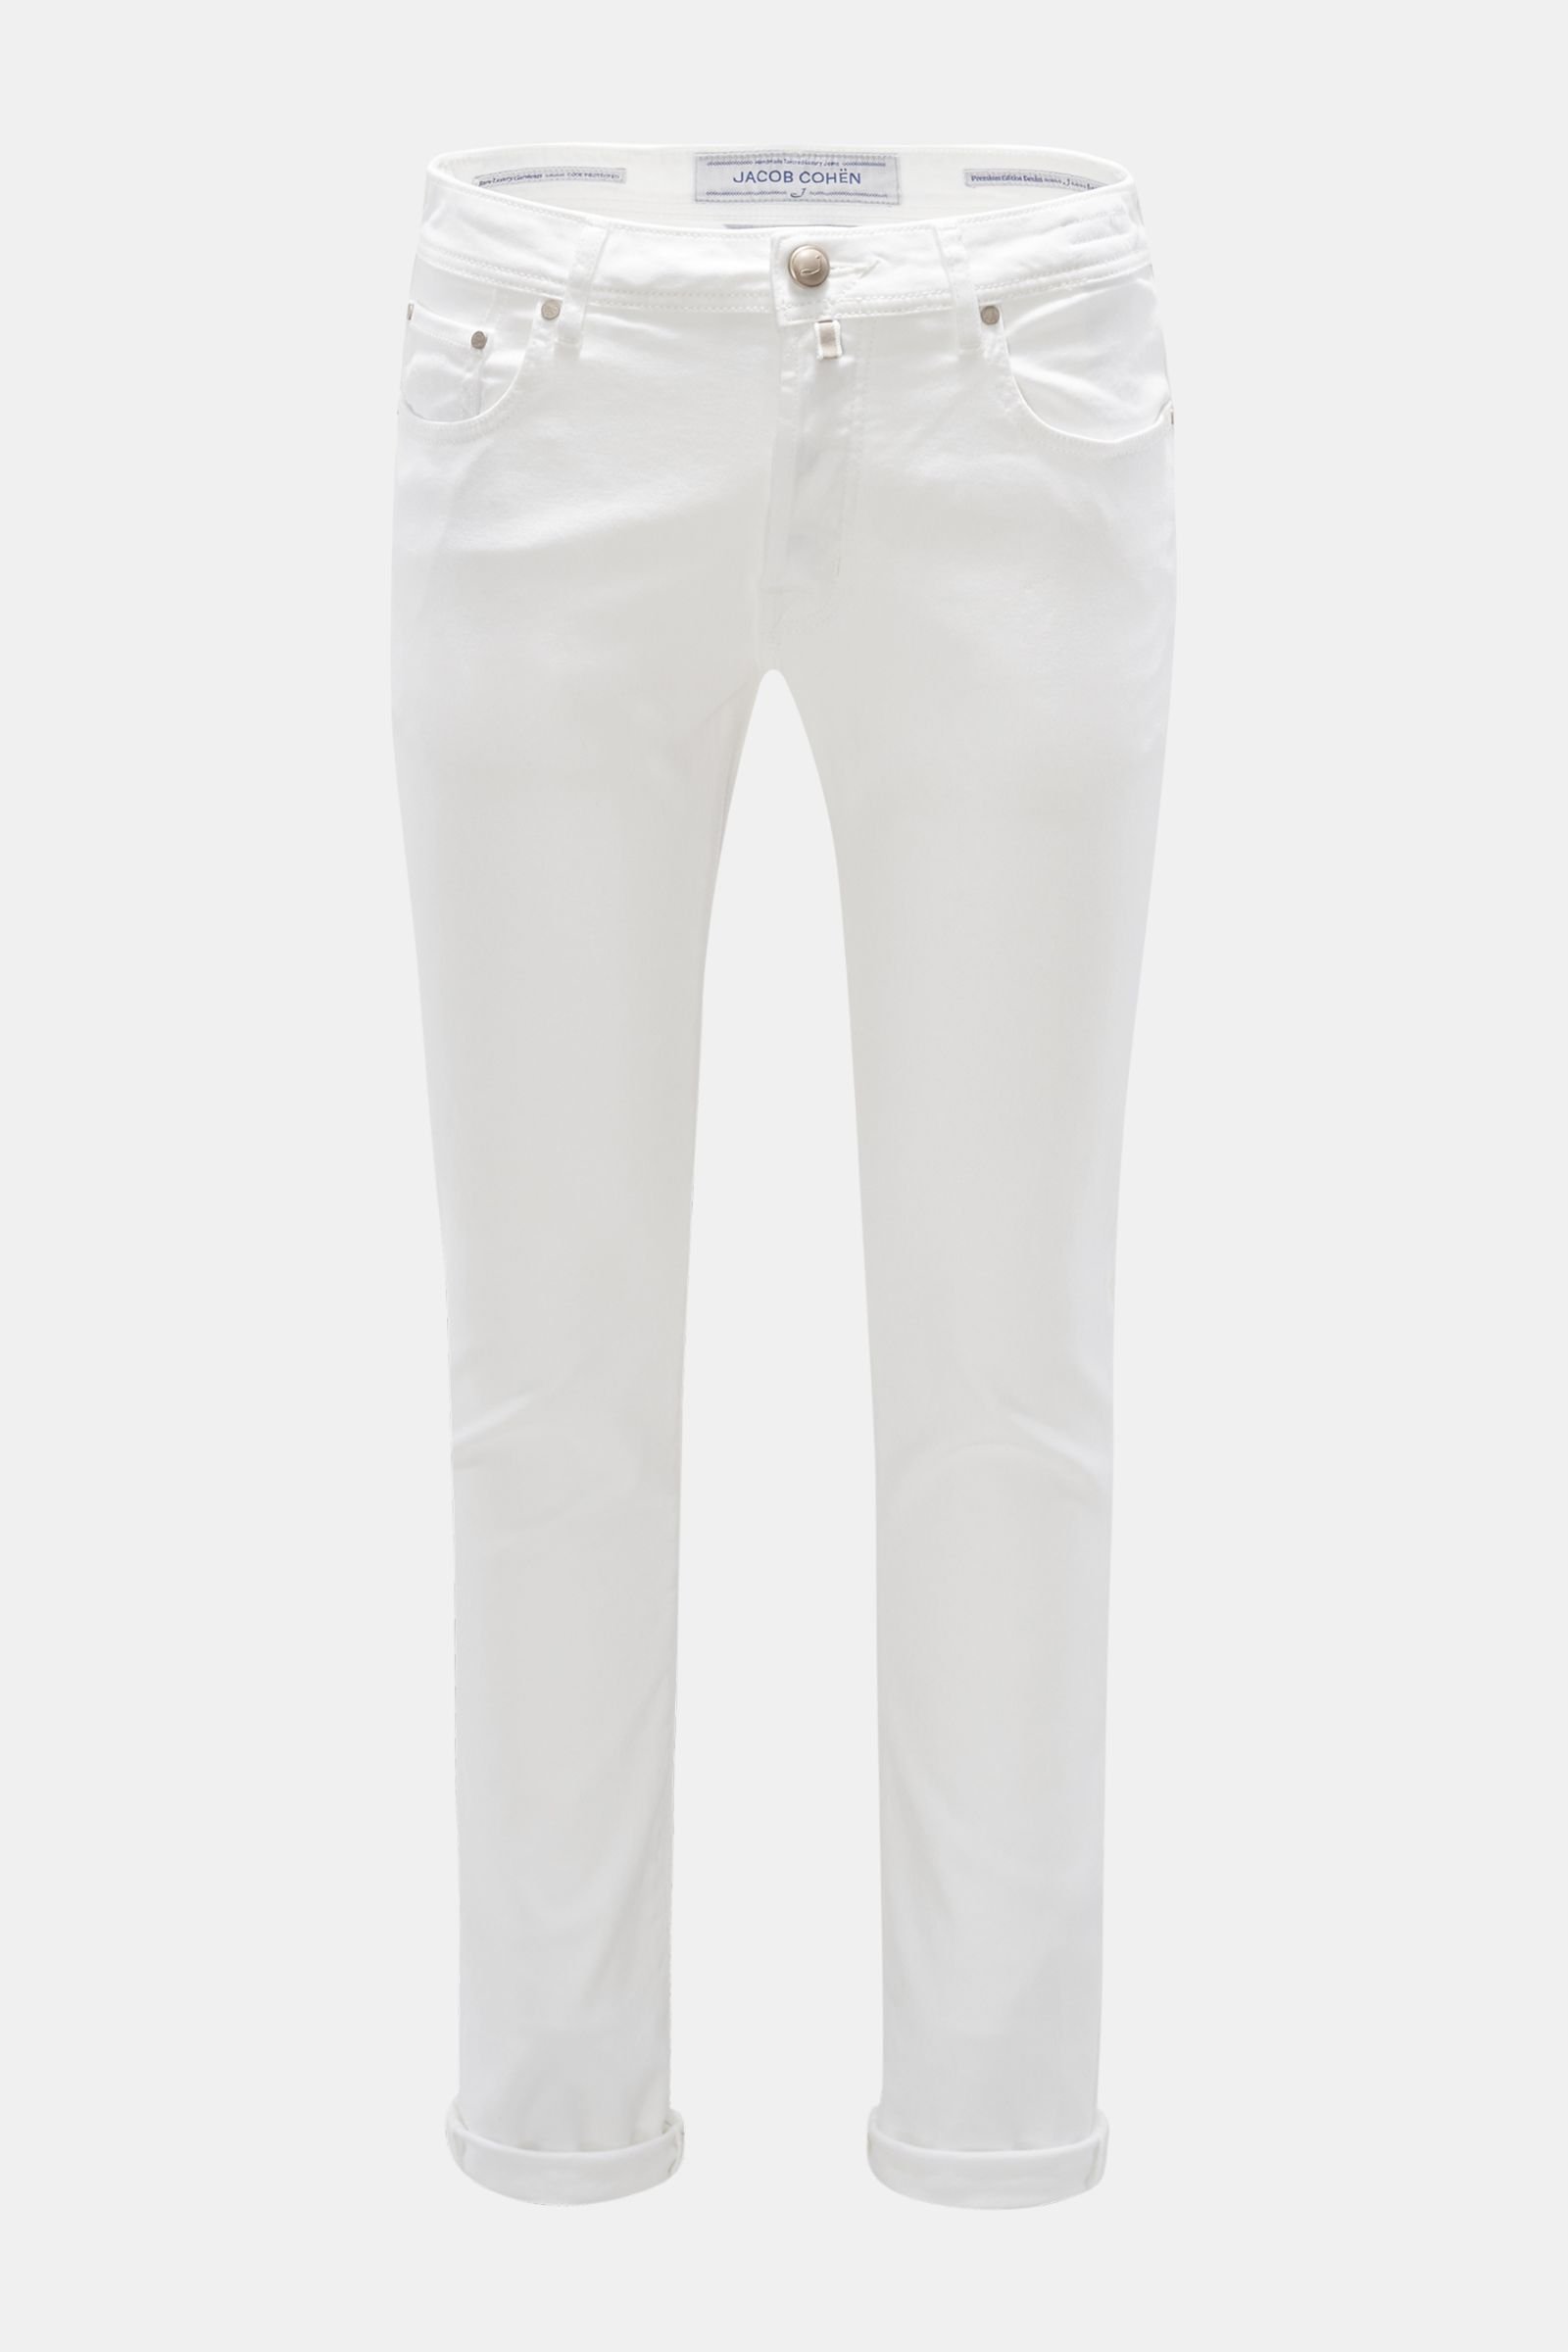 Jeans 'J688 Comfort Slim Fit' white